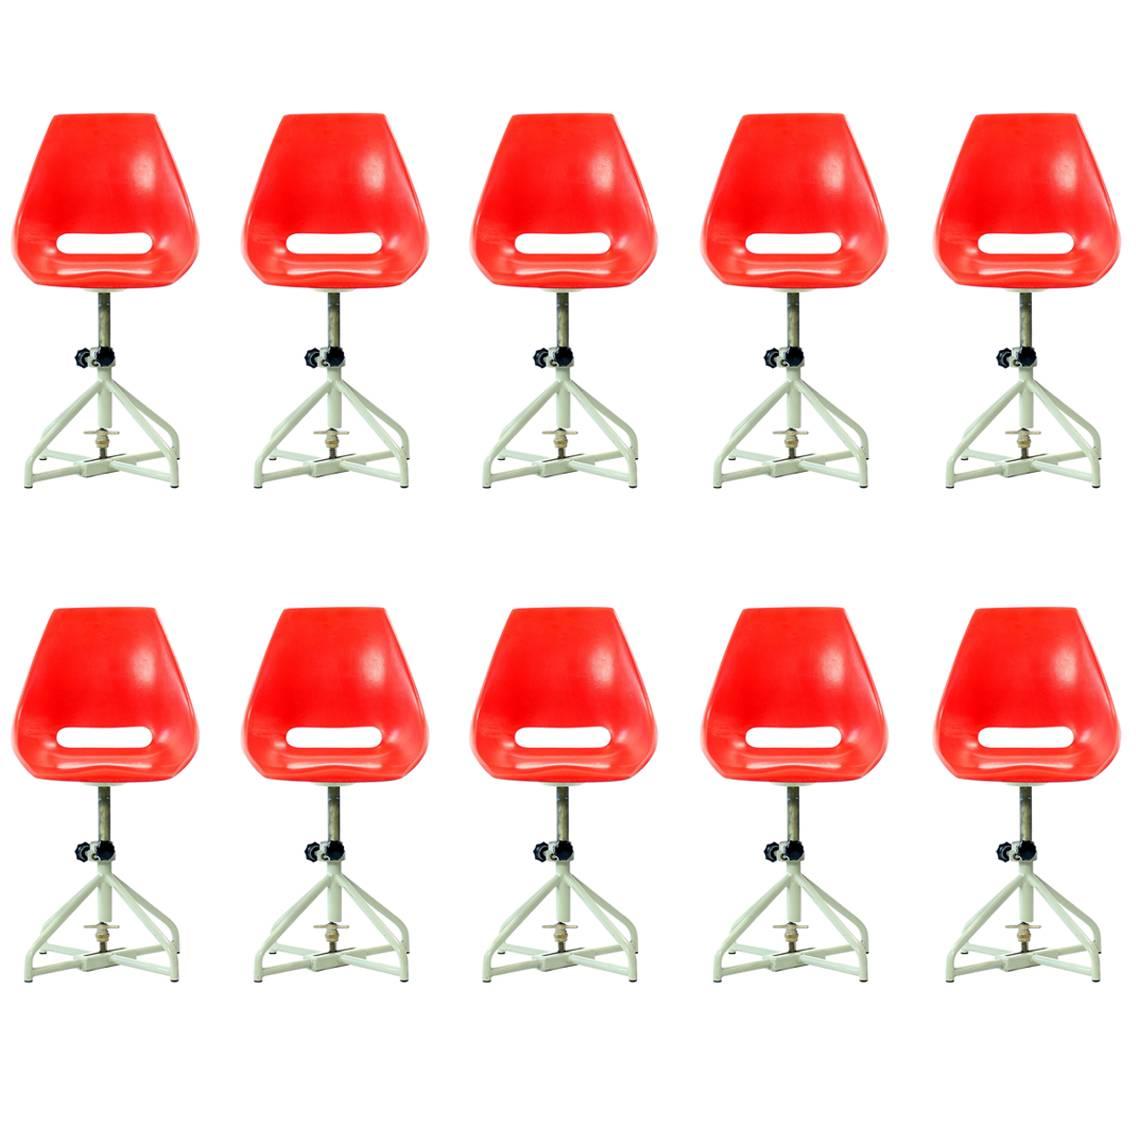 Original Vertex Chairs by Miroslav Navratil, circa 1960 For Sale